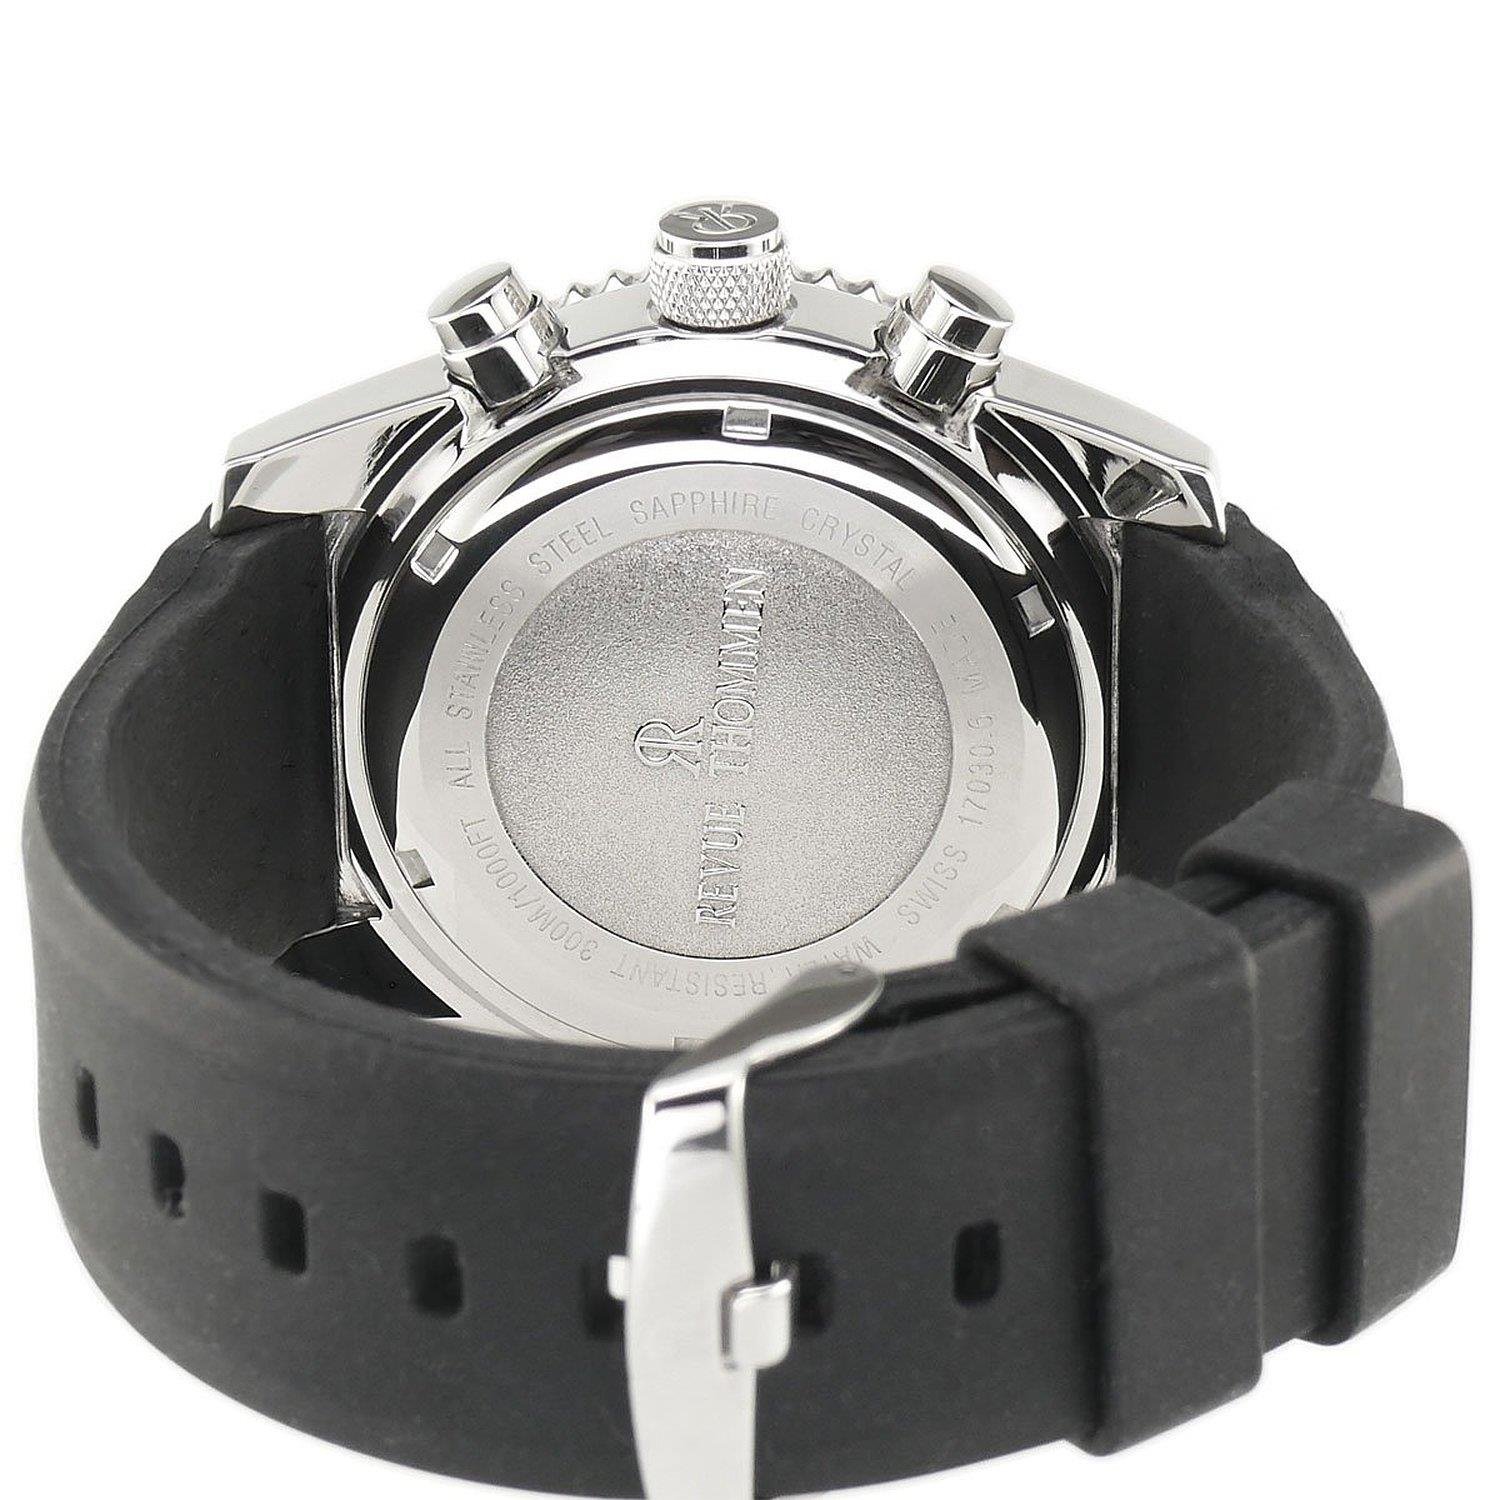 Revue Thommen Men's Automatic Watch Diver Professional Chronograph 17030.6537 with Rubber Strap